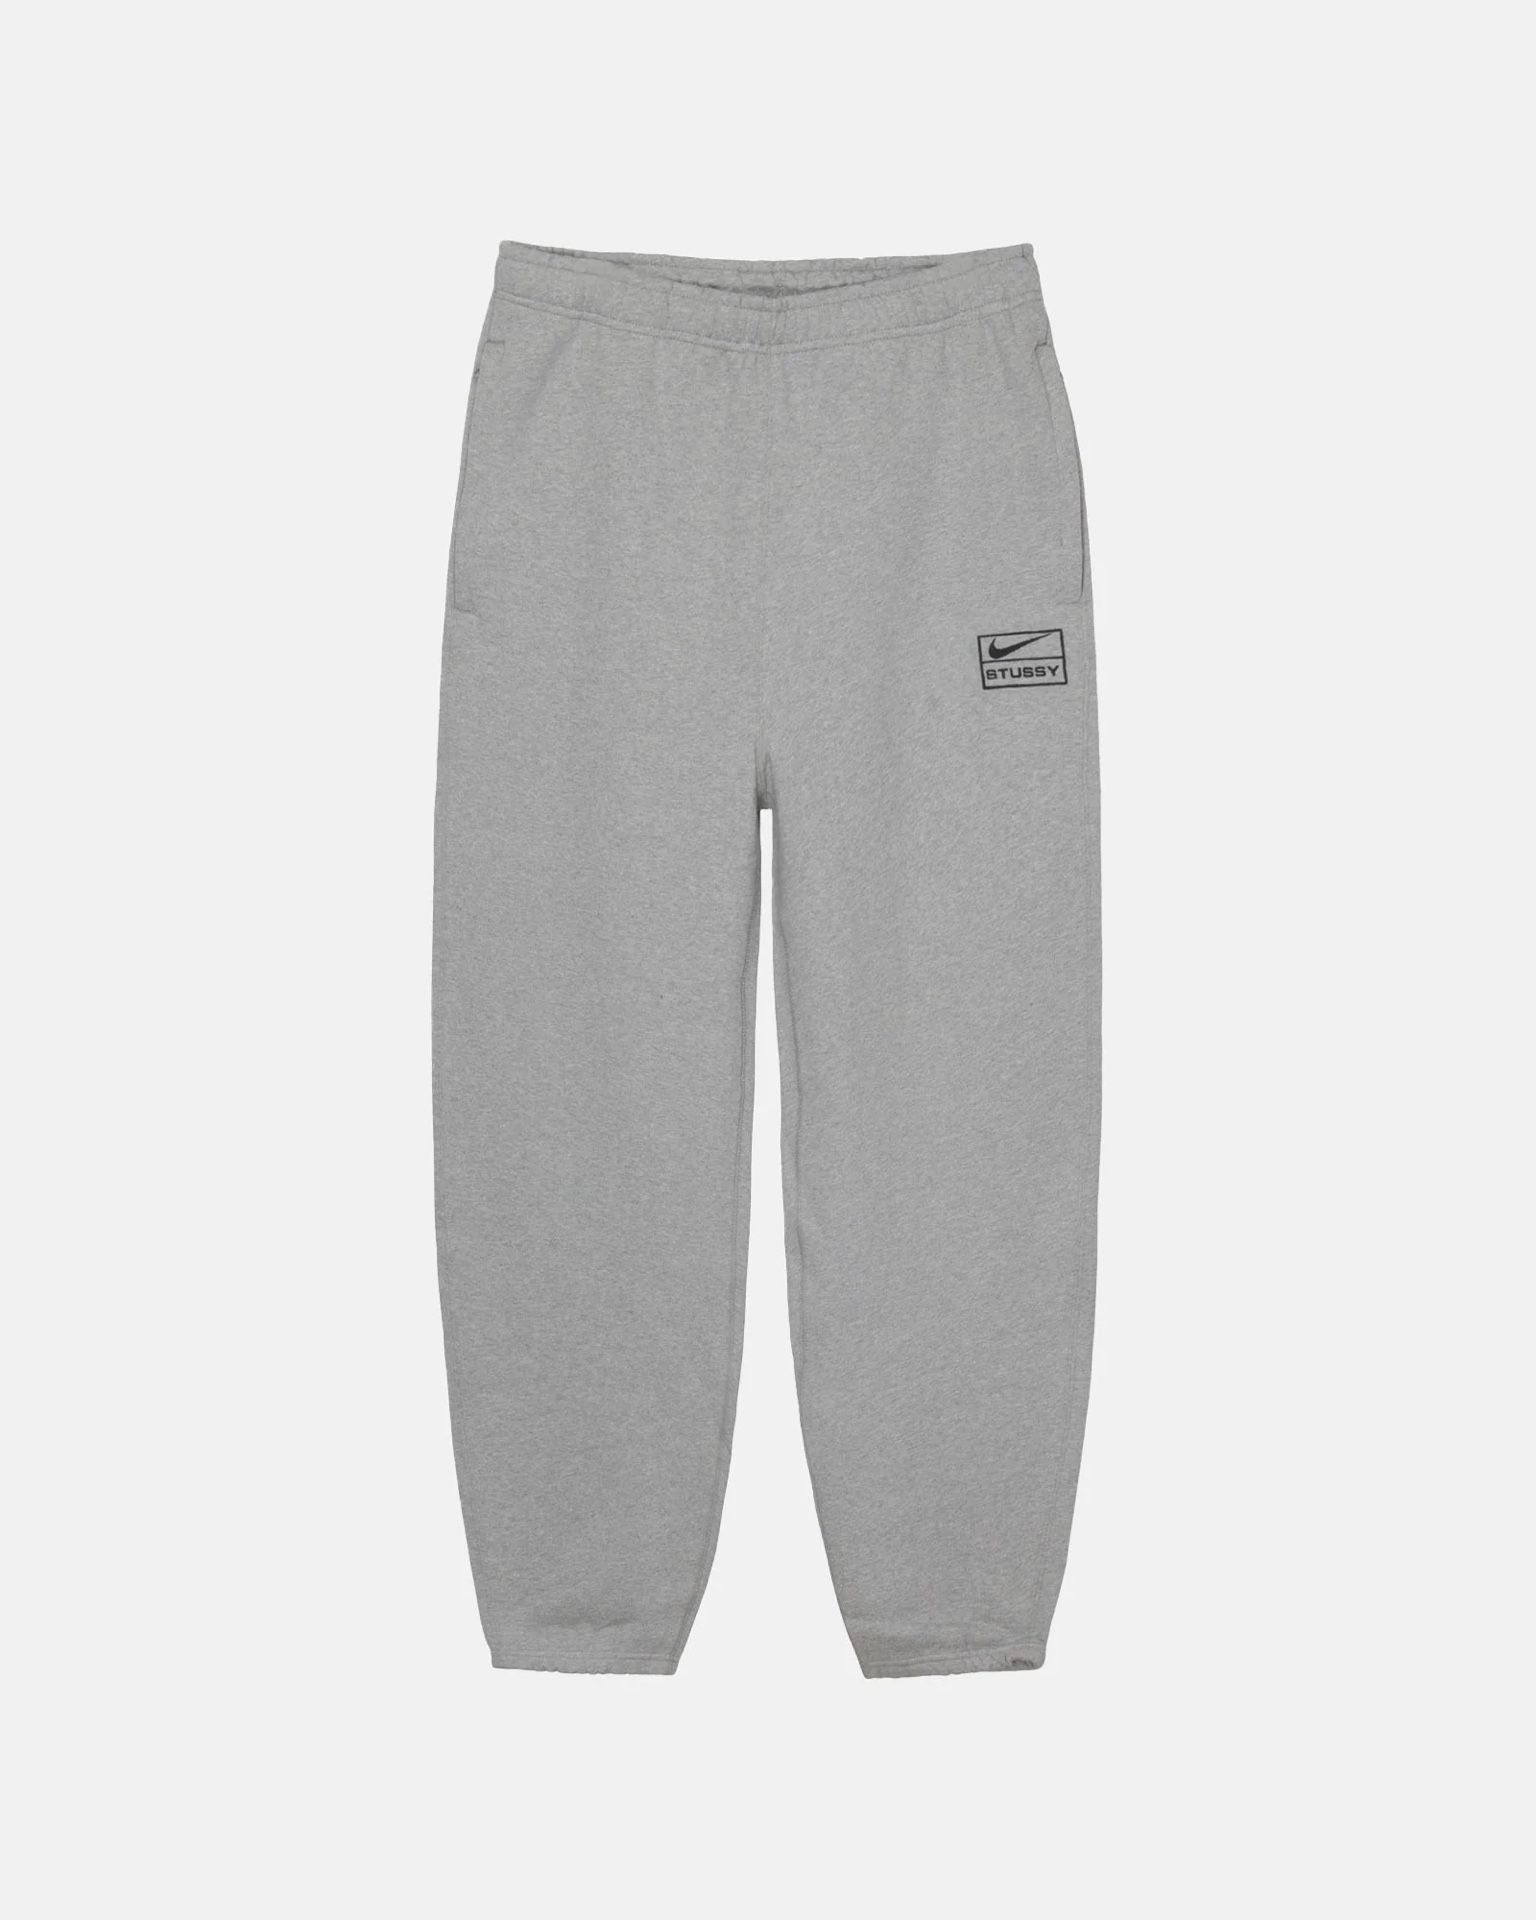 Nike x Stussy Fleece Sweatpants